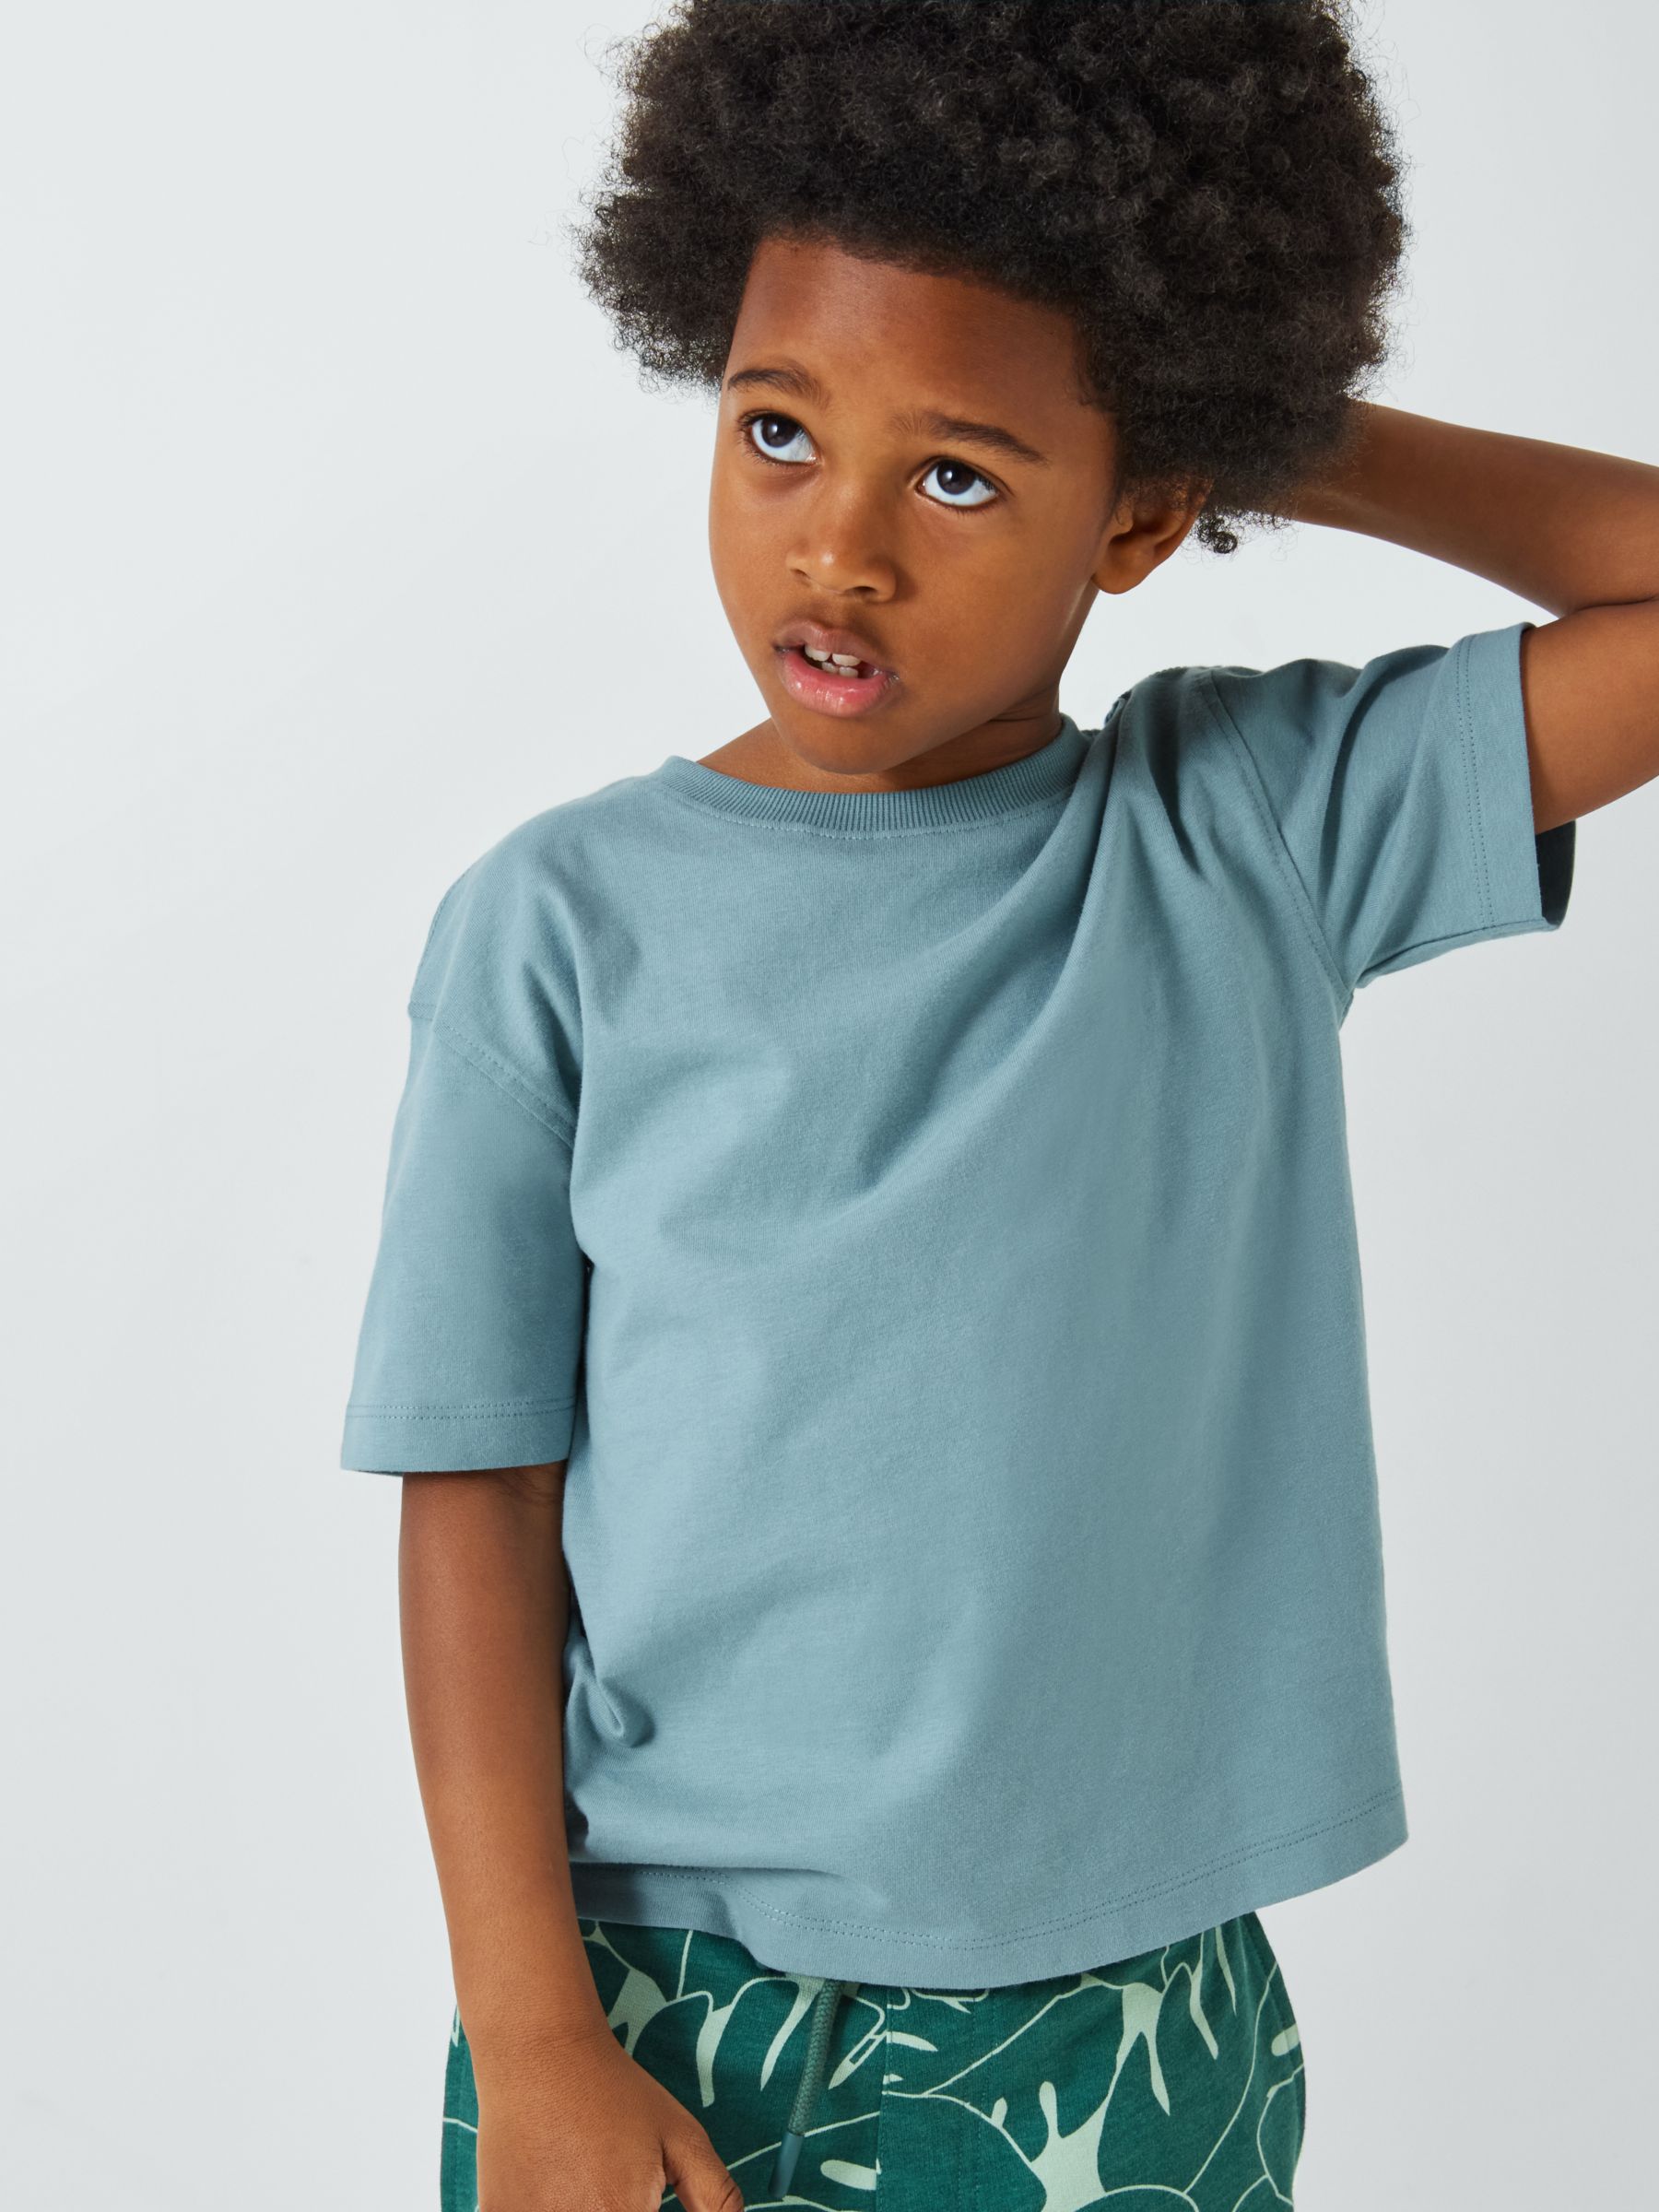 John Lewis Kids' Short Sleeve Cotton T-Shirt, Pack of 4, Multi, 7 years